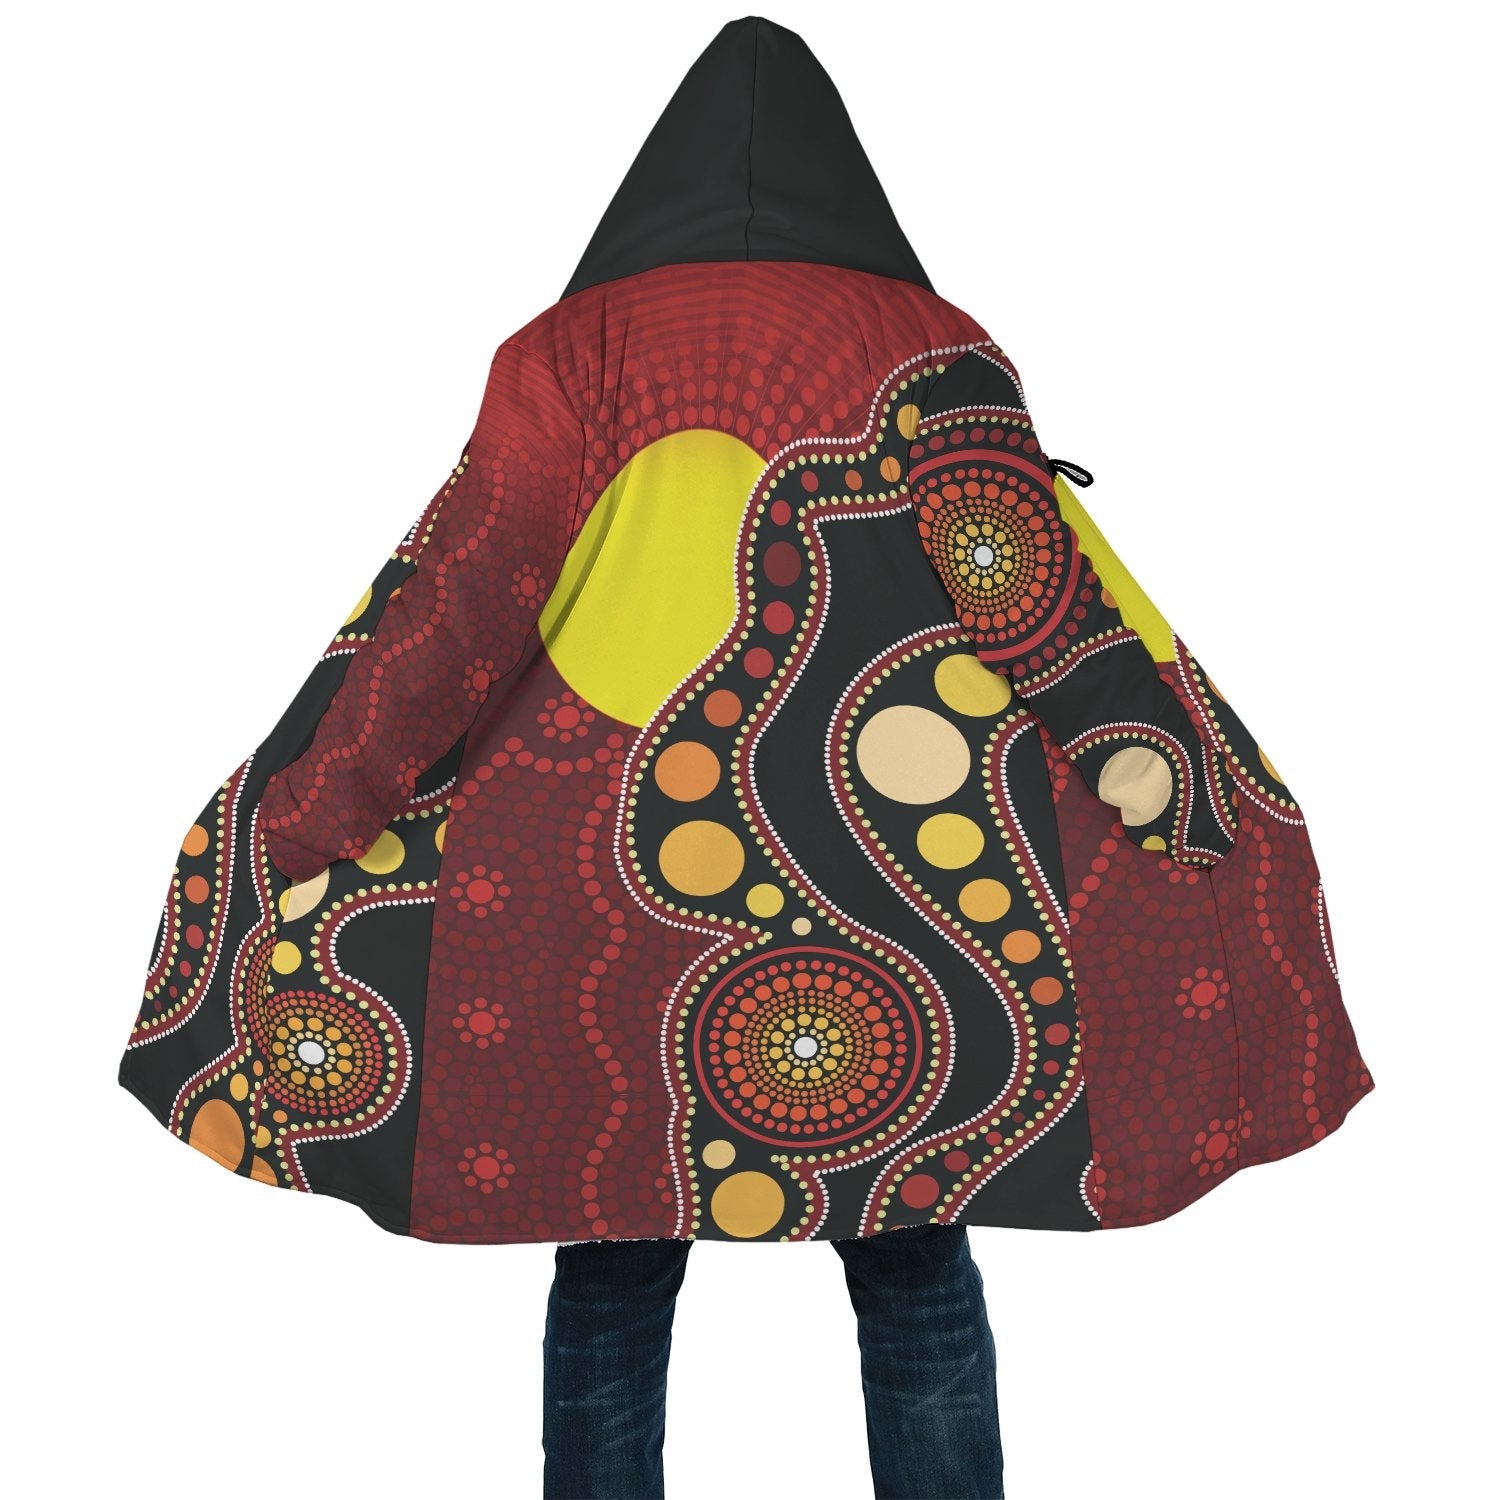 Aboriginal Cloak - Australia Aboriginal Lives Matter Flag Circle Dot Painting Art